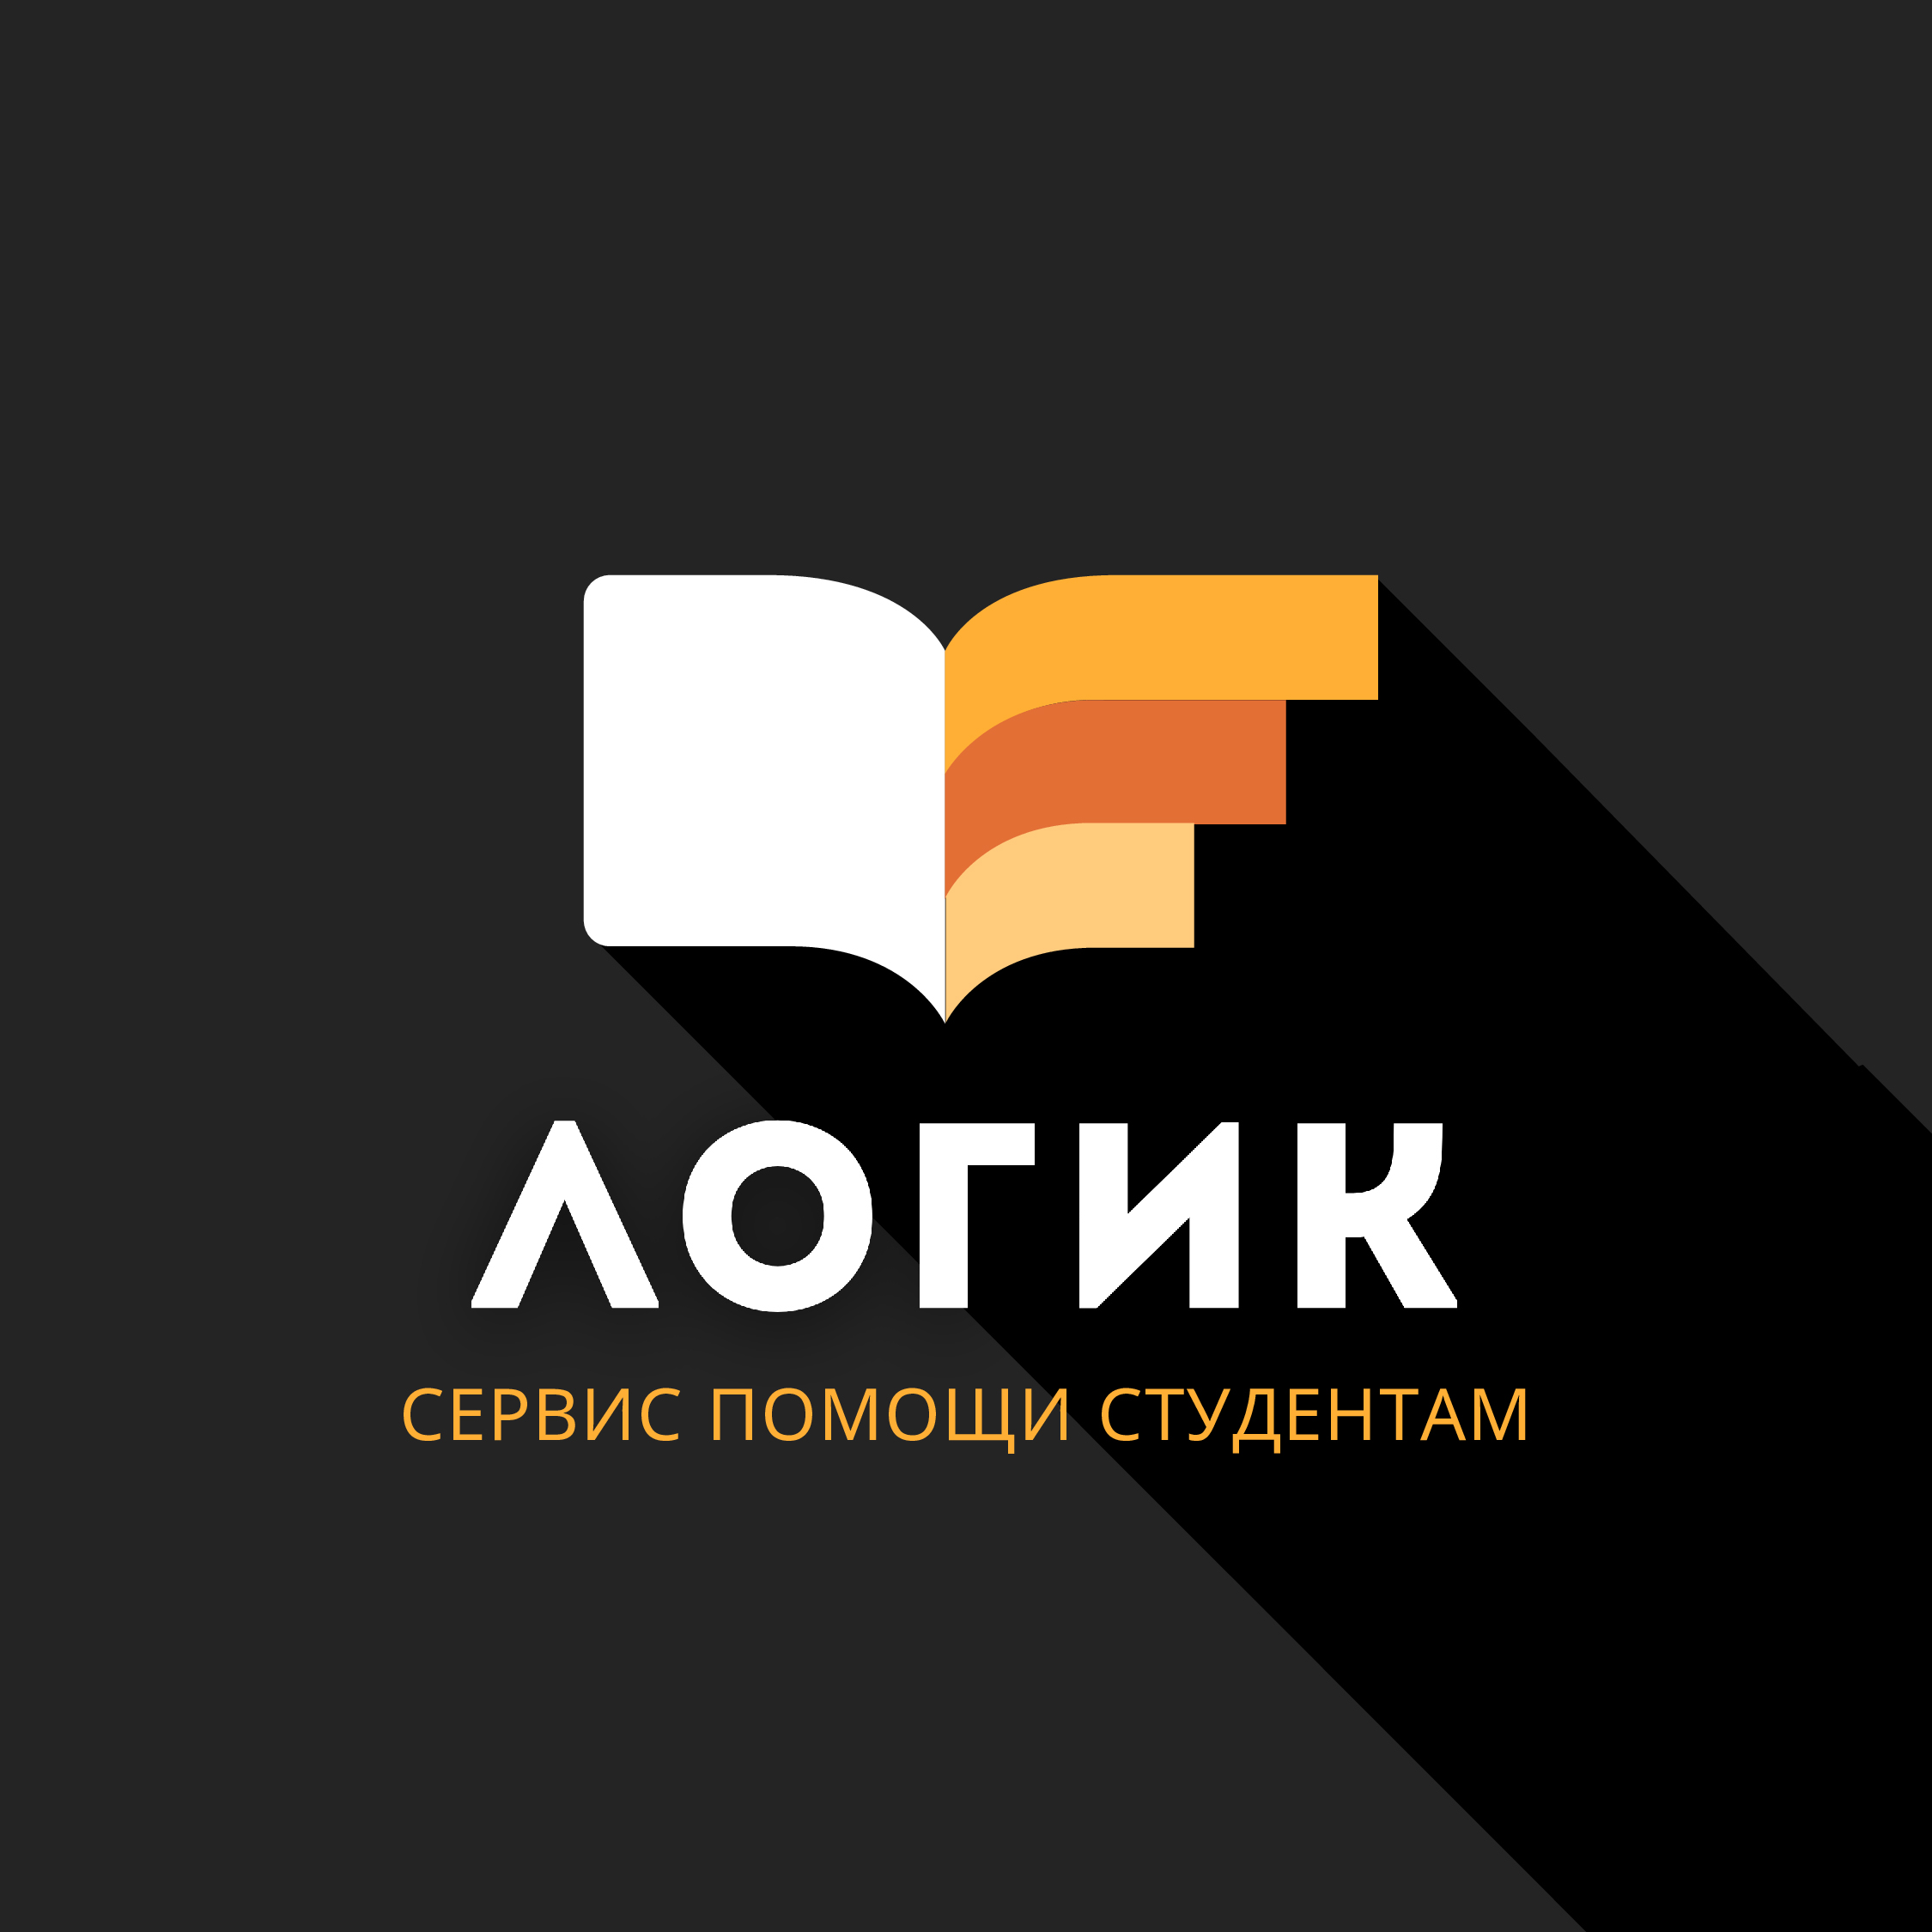 Логик — сервис помощи студентам и аспирантам в Казахстане